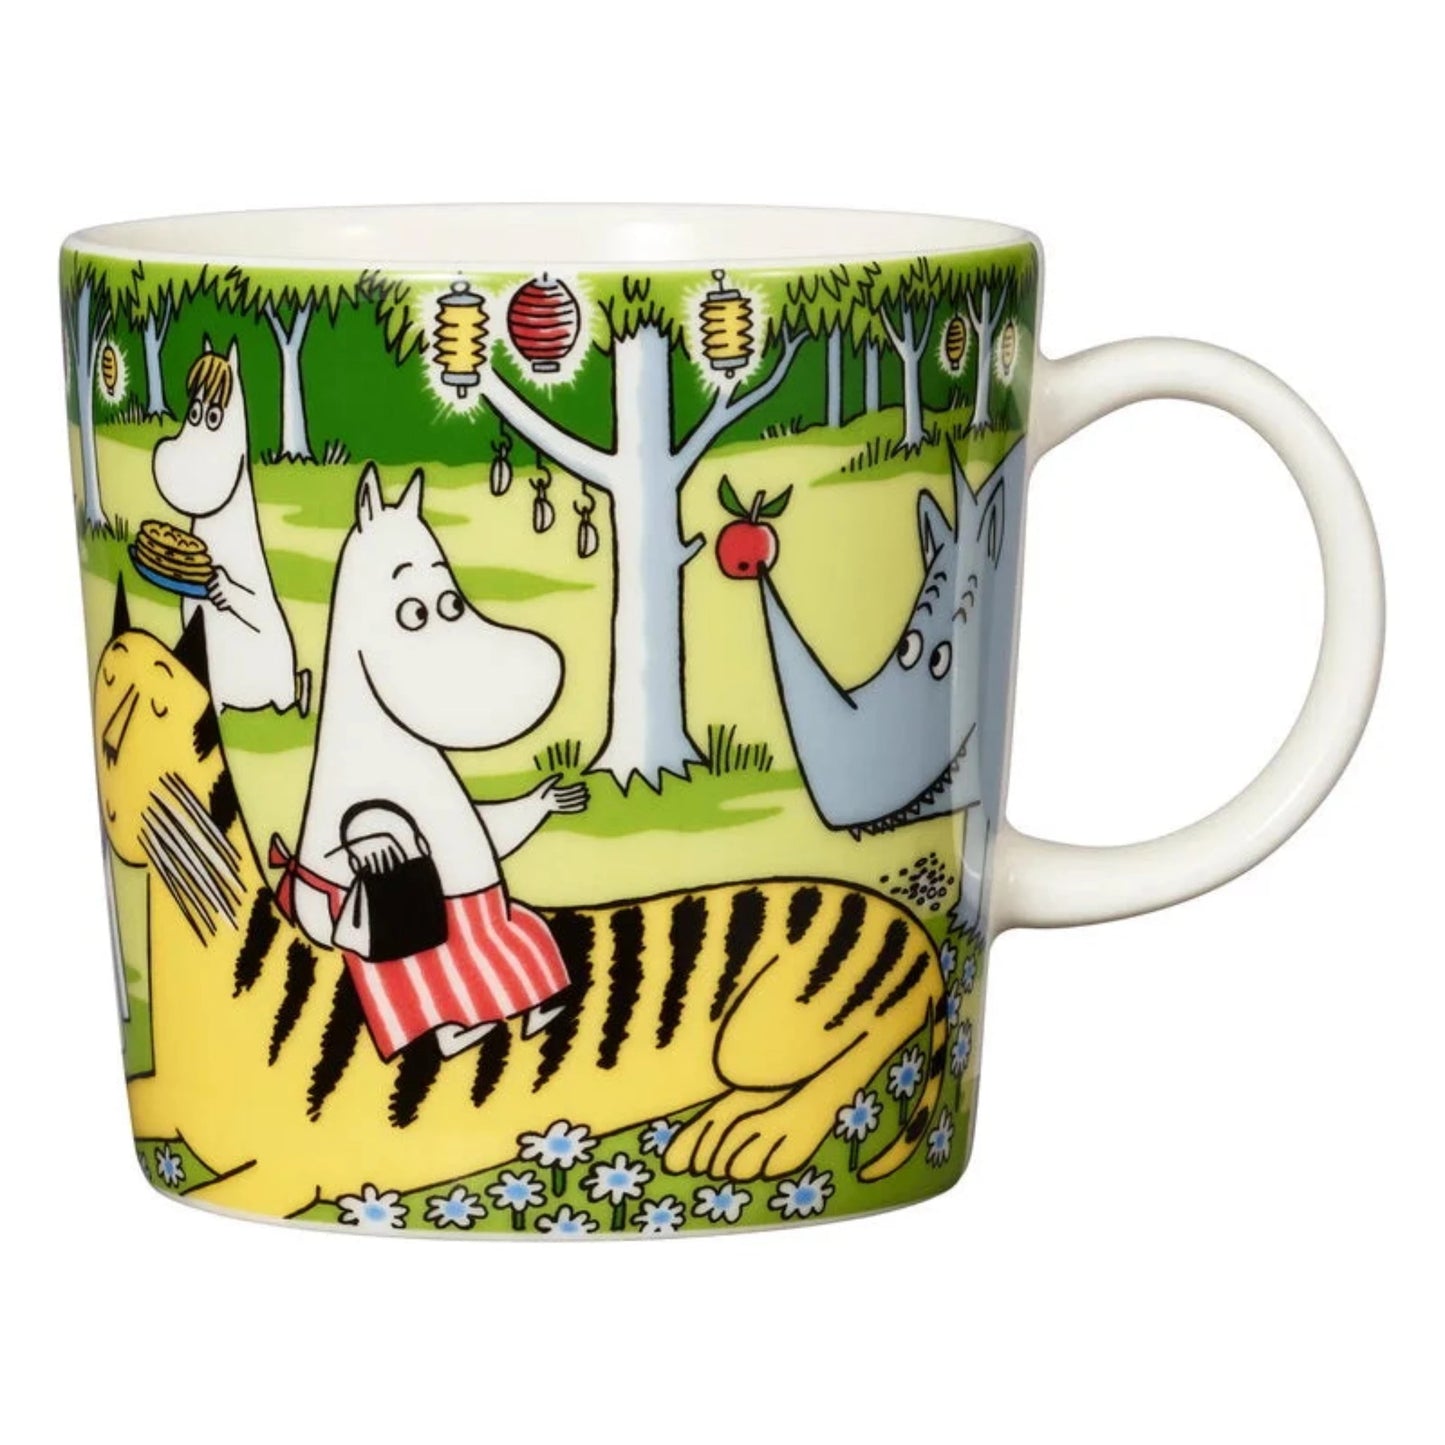 Moomin Mug by Arabia, Garden Party (8765761978655)